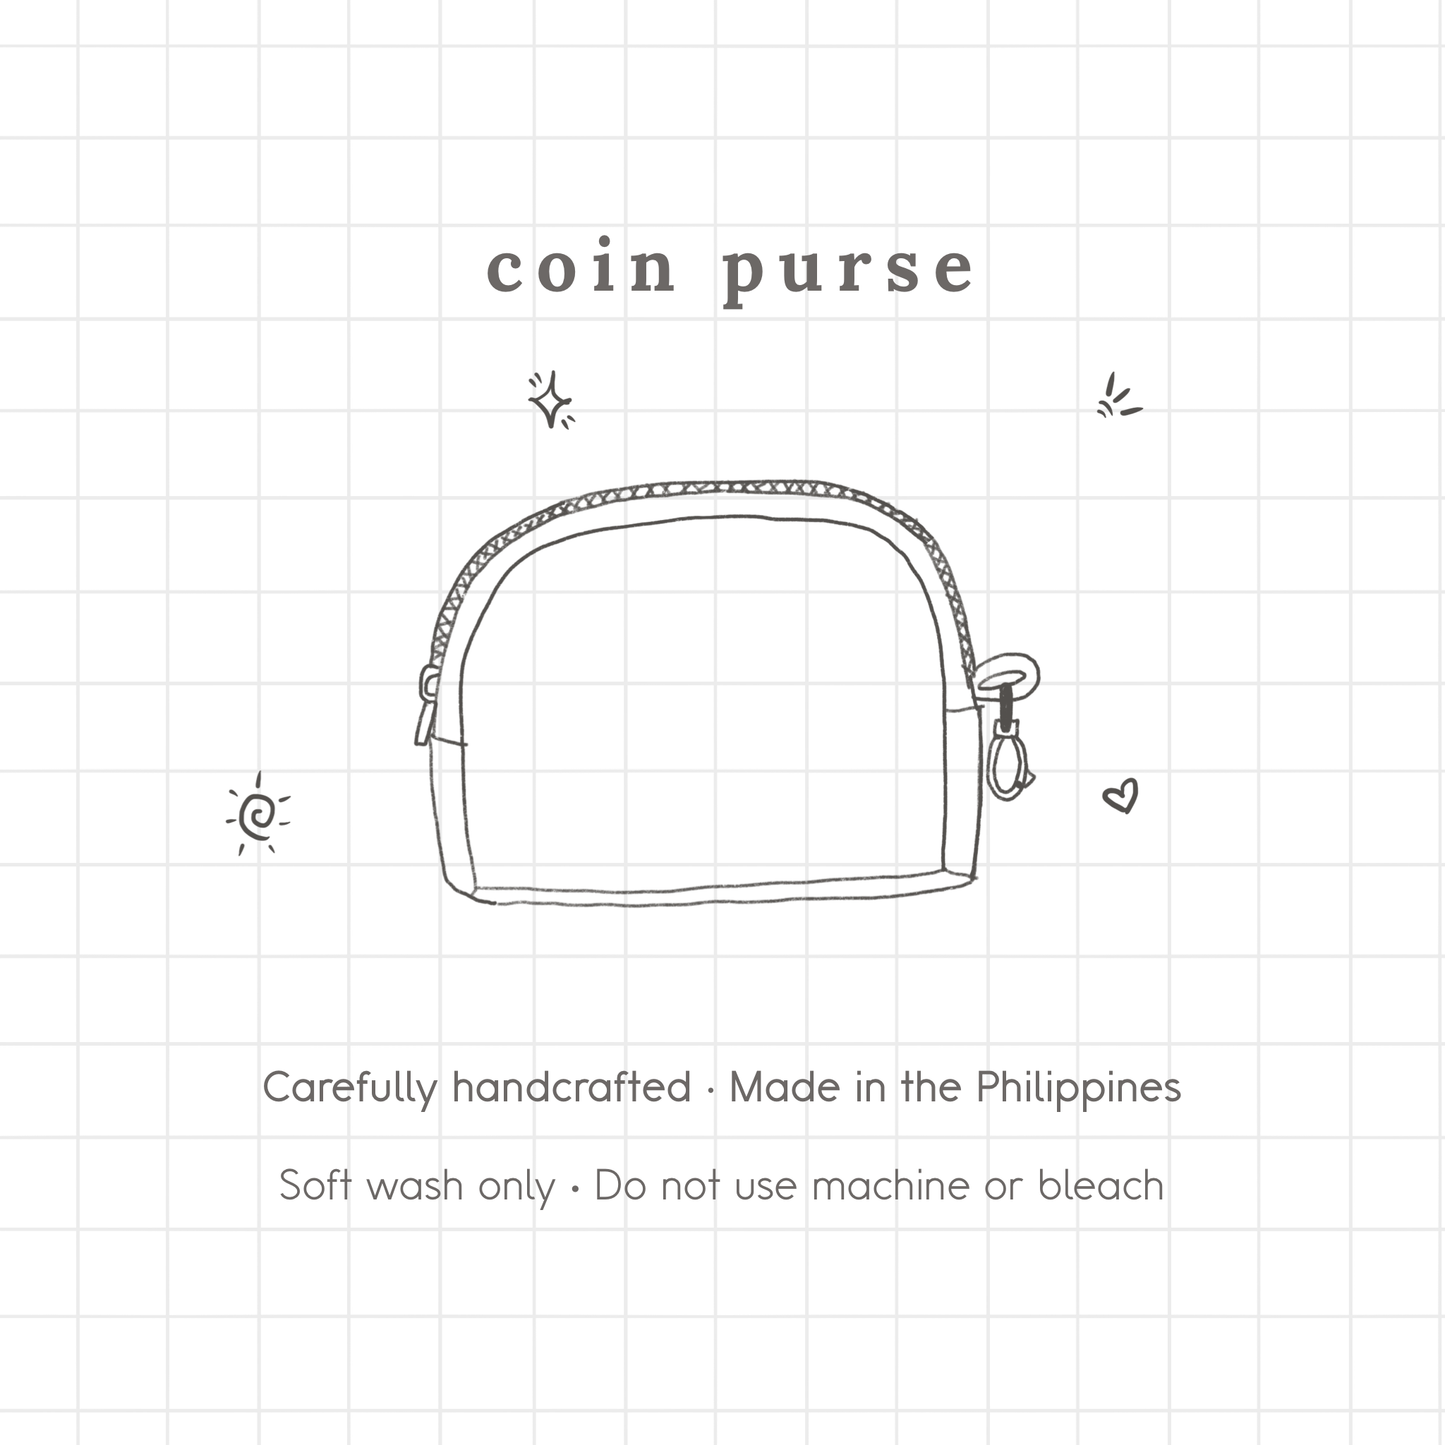 Coin Purse